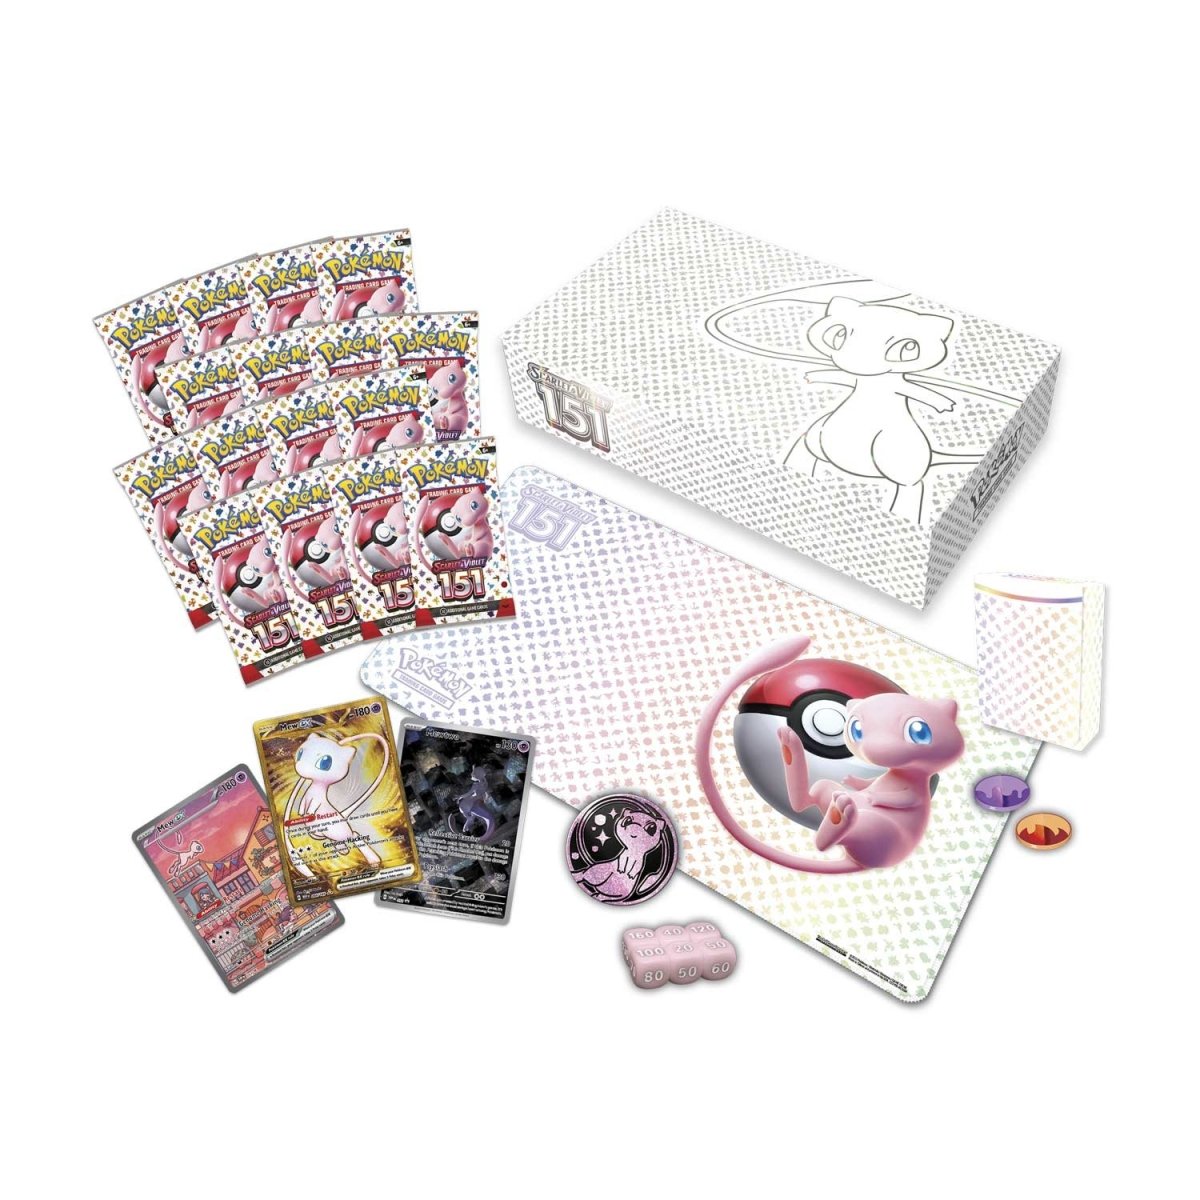 Pokemon Card Game TCG Scarlet & Violet Premium Trainer BOX ex